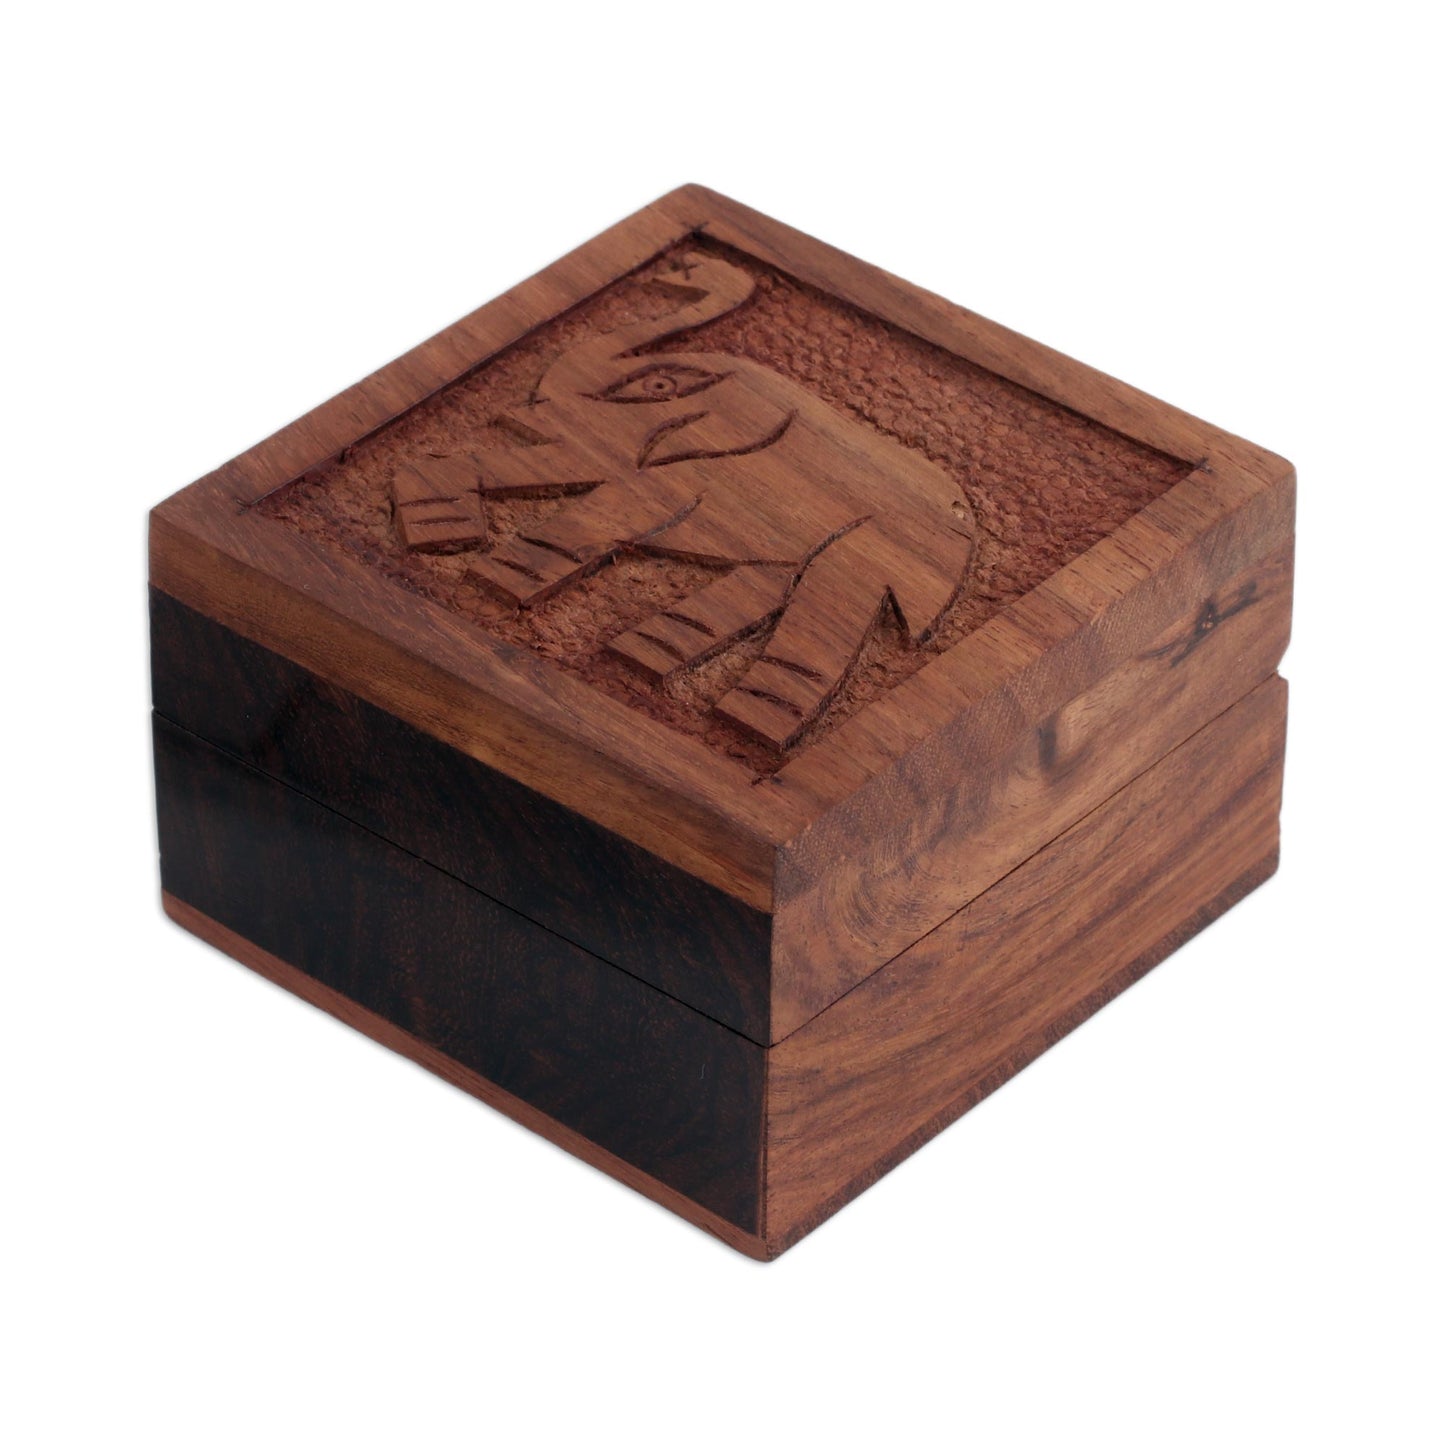 Elephant Strut Elephant-Themed Acacia Wood Decorative Box from India